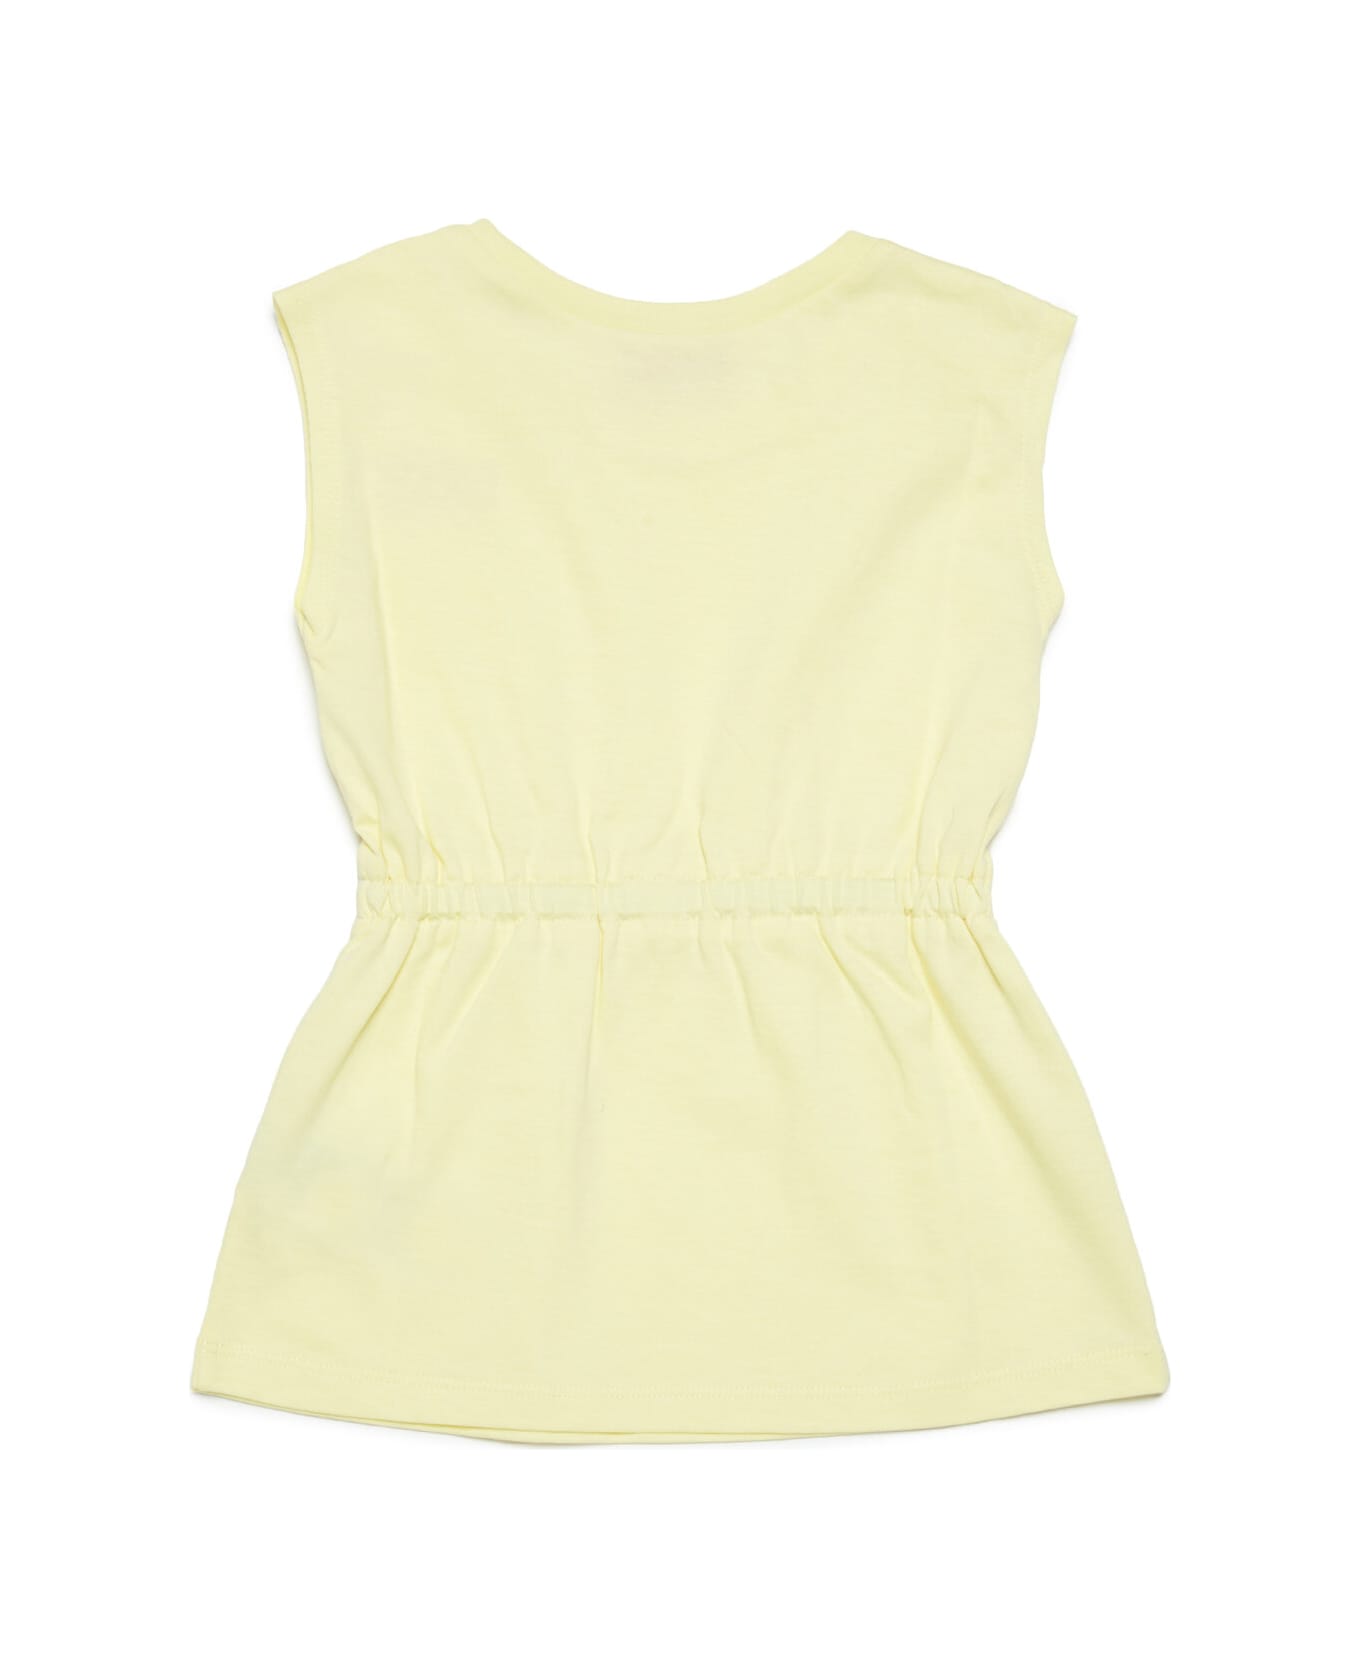 Diesel Mcursib Sw Cover-ups Diesel Yellow Sleeveless Jersey Cover-up Dress With Logo - Lemonade